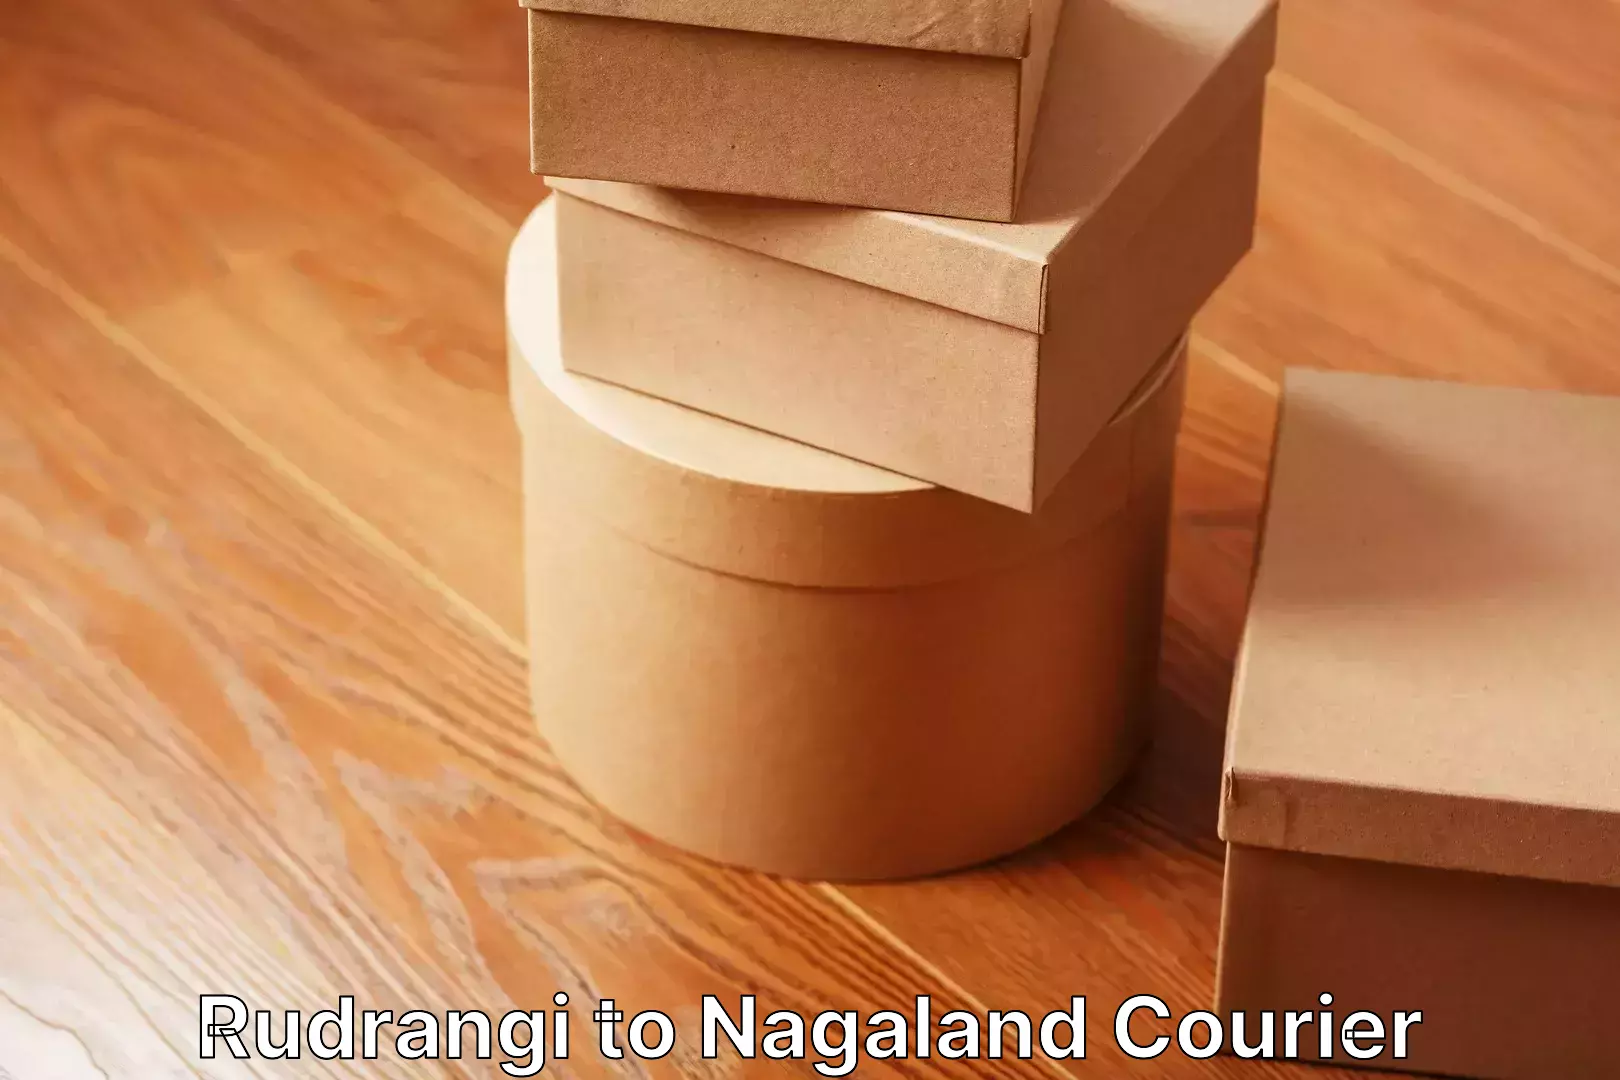 Household moving experts Rudrangi to Nagaland